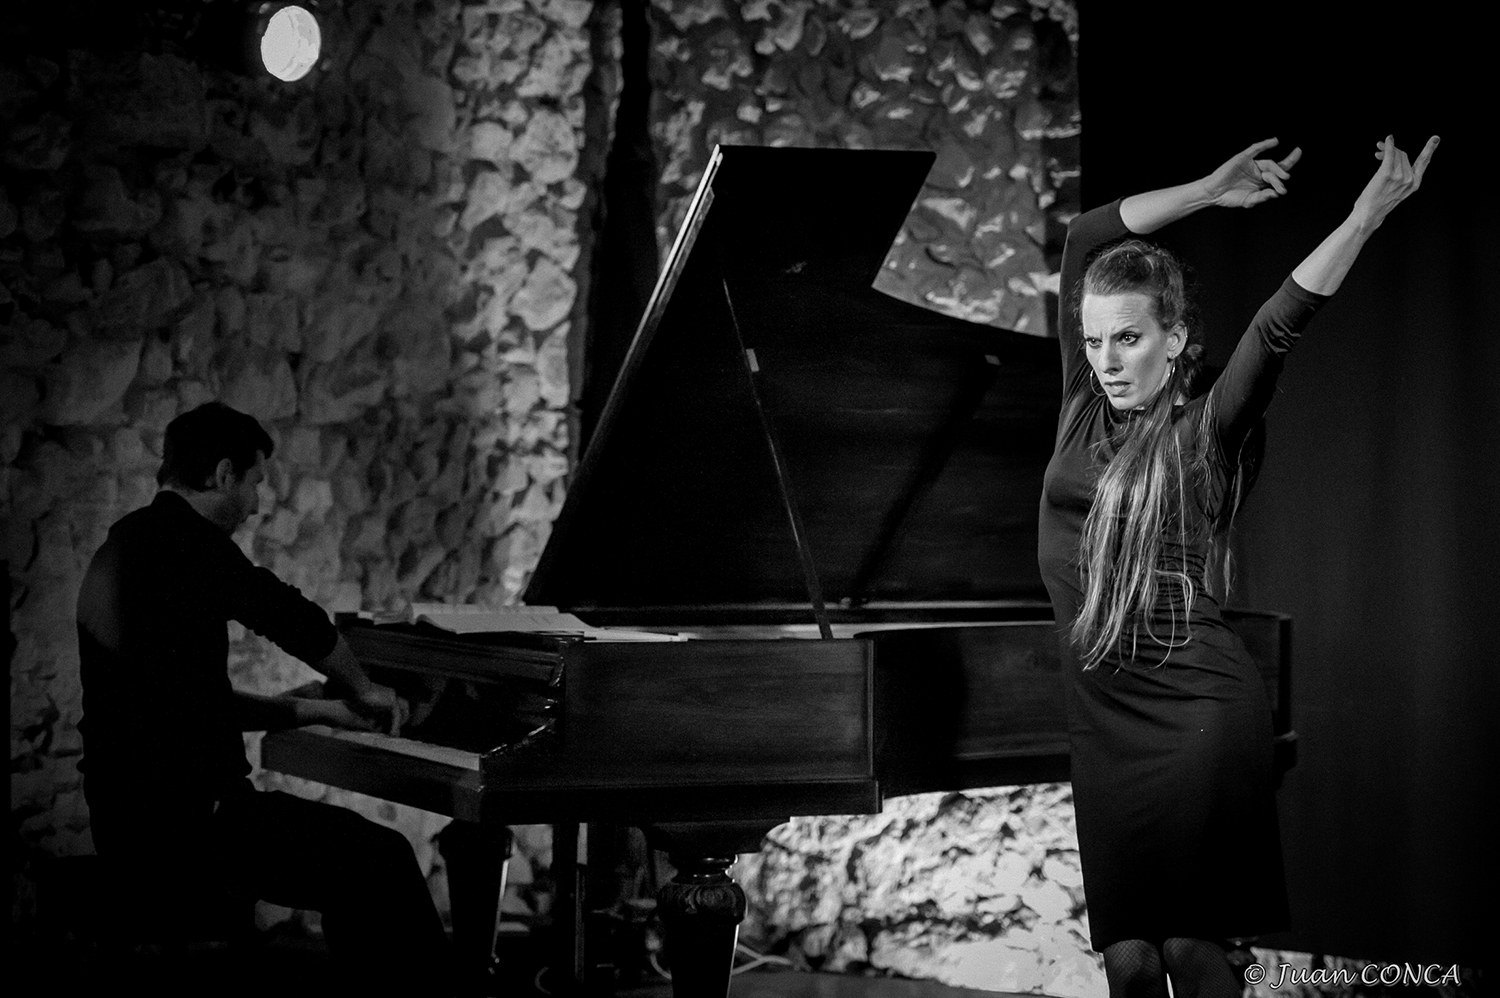 Piano et flamenco : une alchimie surprenante !